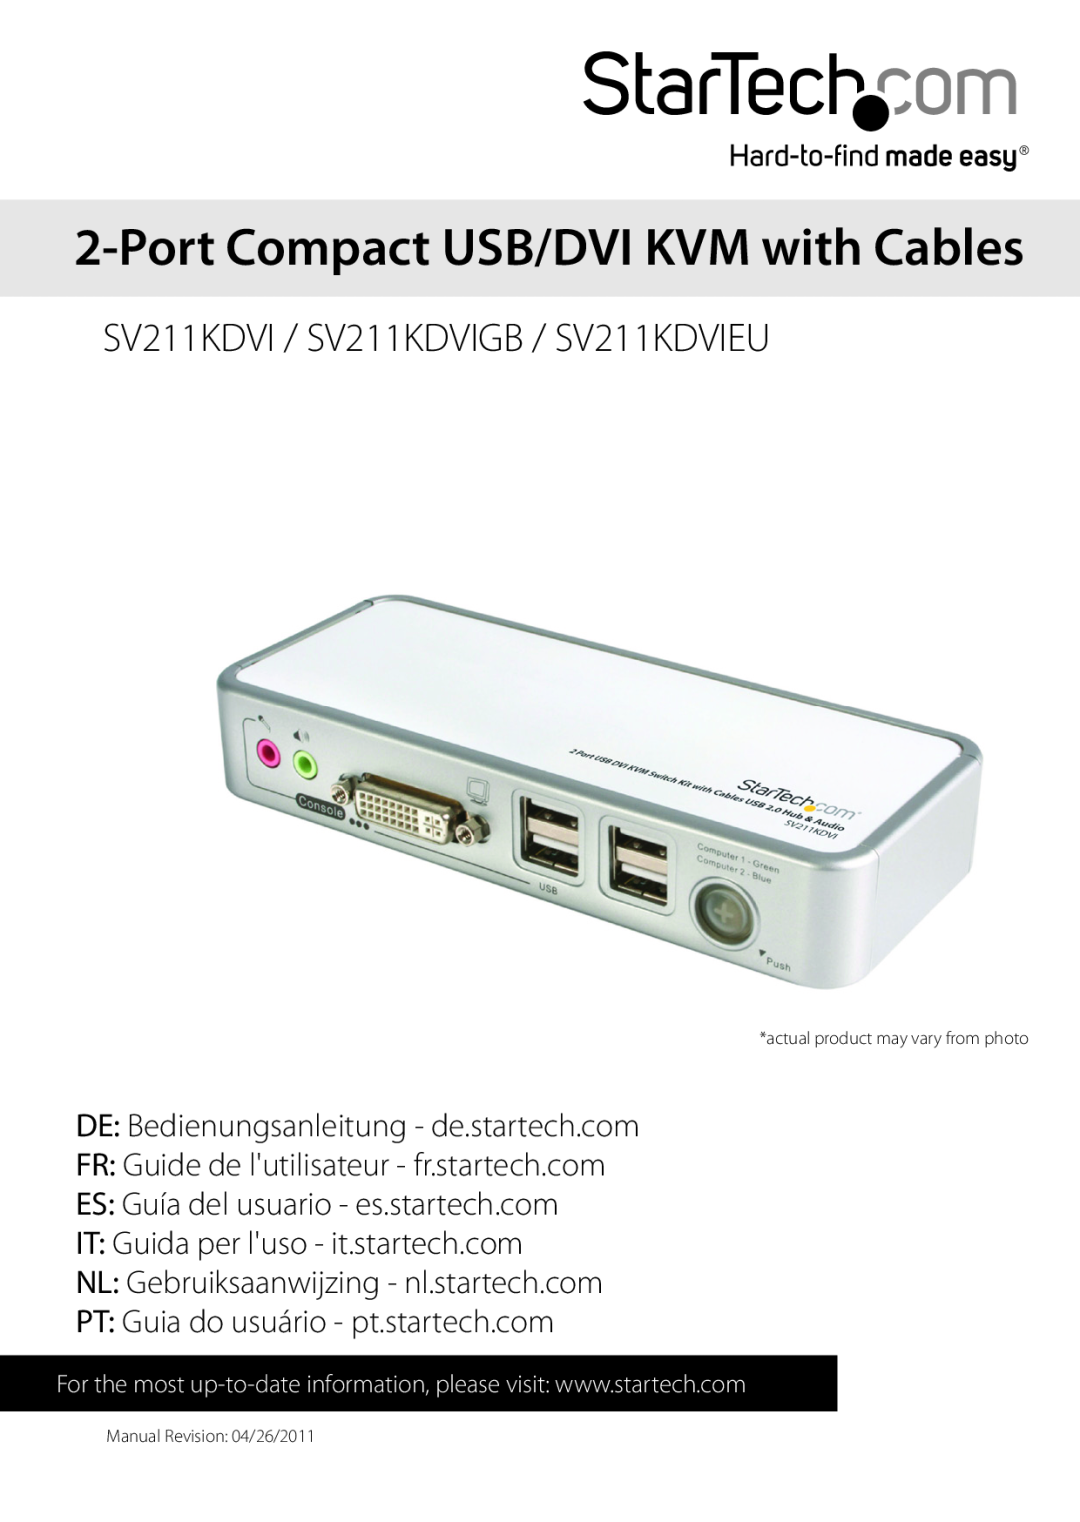 StarTech.com manual Port Compact USB/DVI KVM with Cables, SV211KDVI / SV211KDVIGB / SV211KDVIEU 